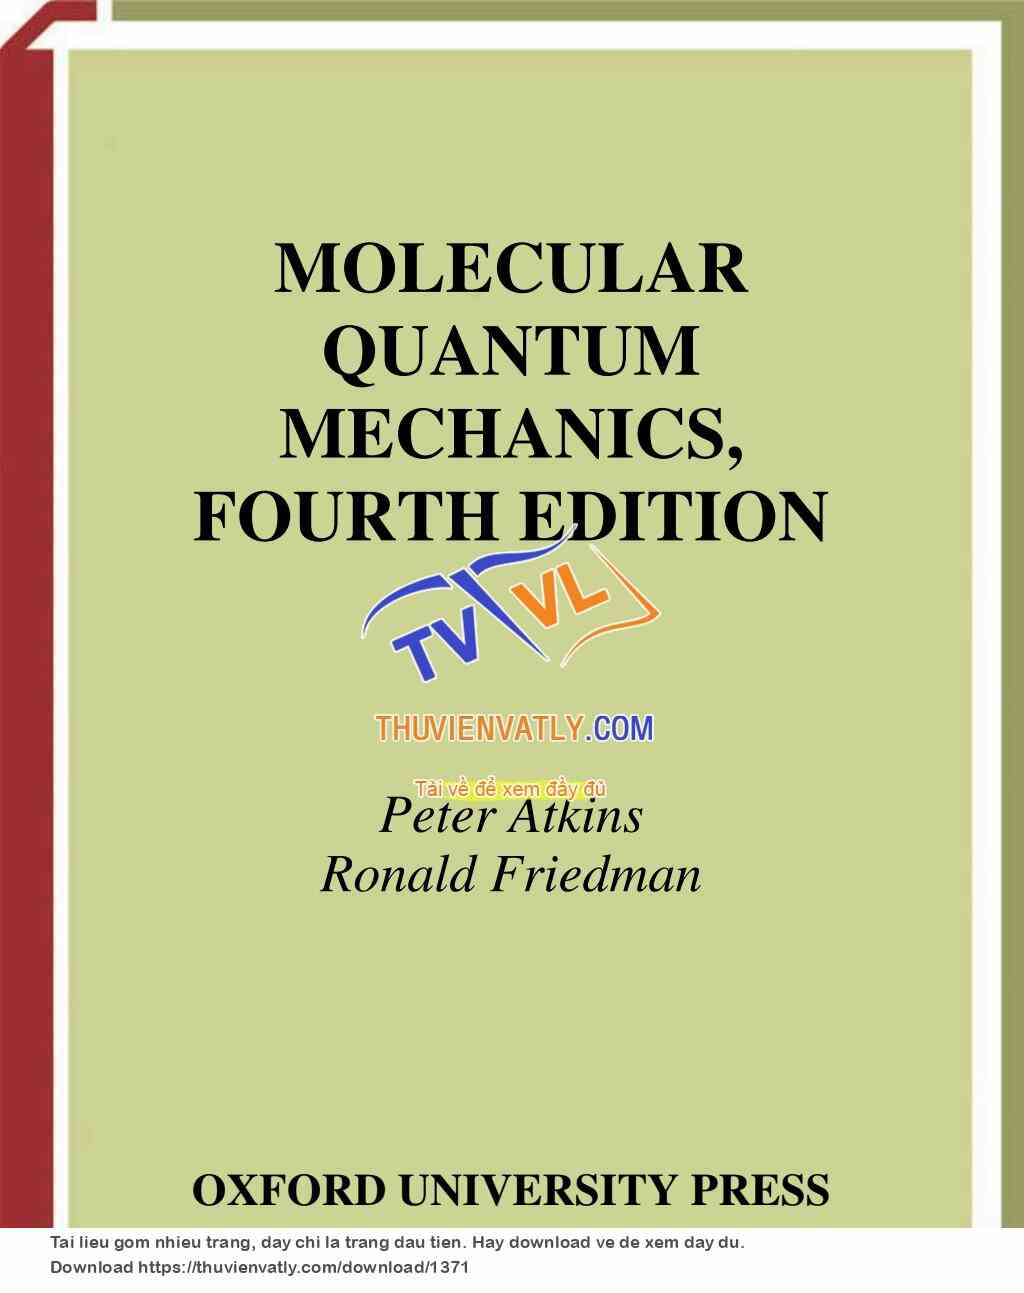 Molecular quantum mechanics